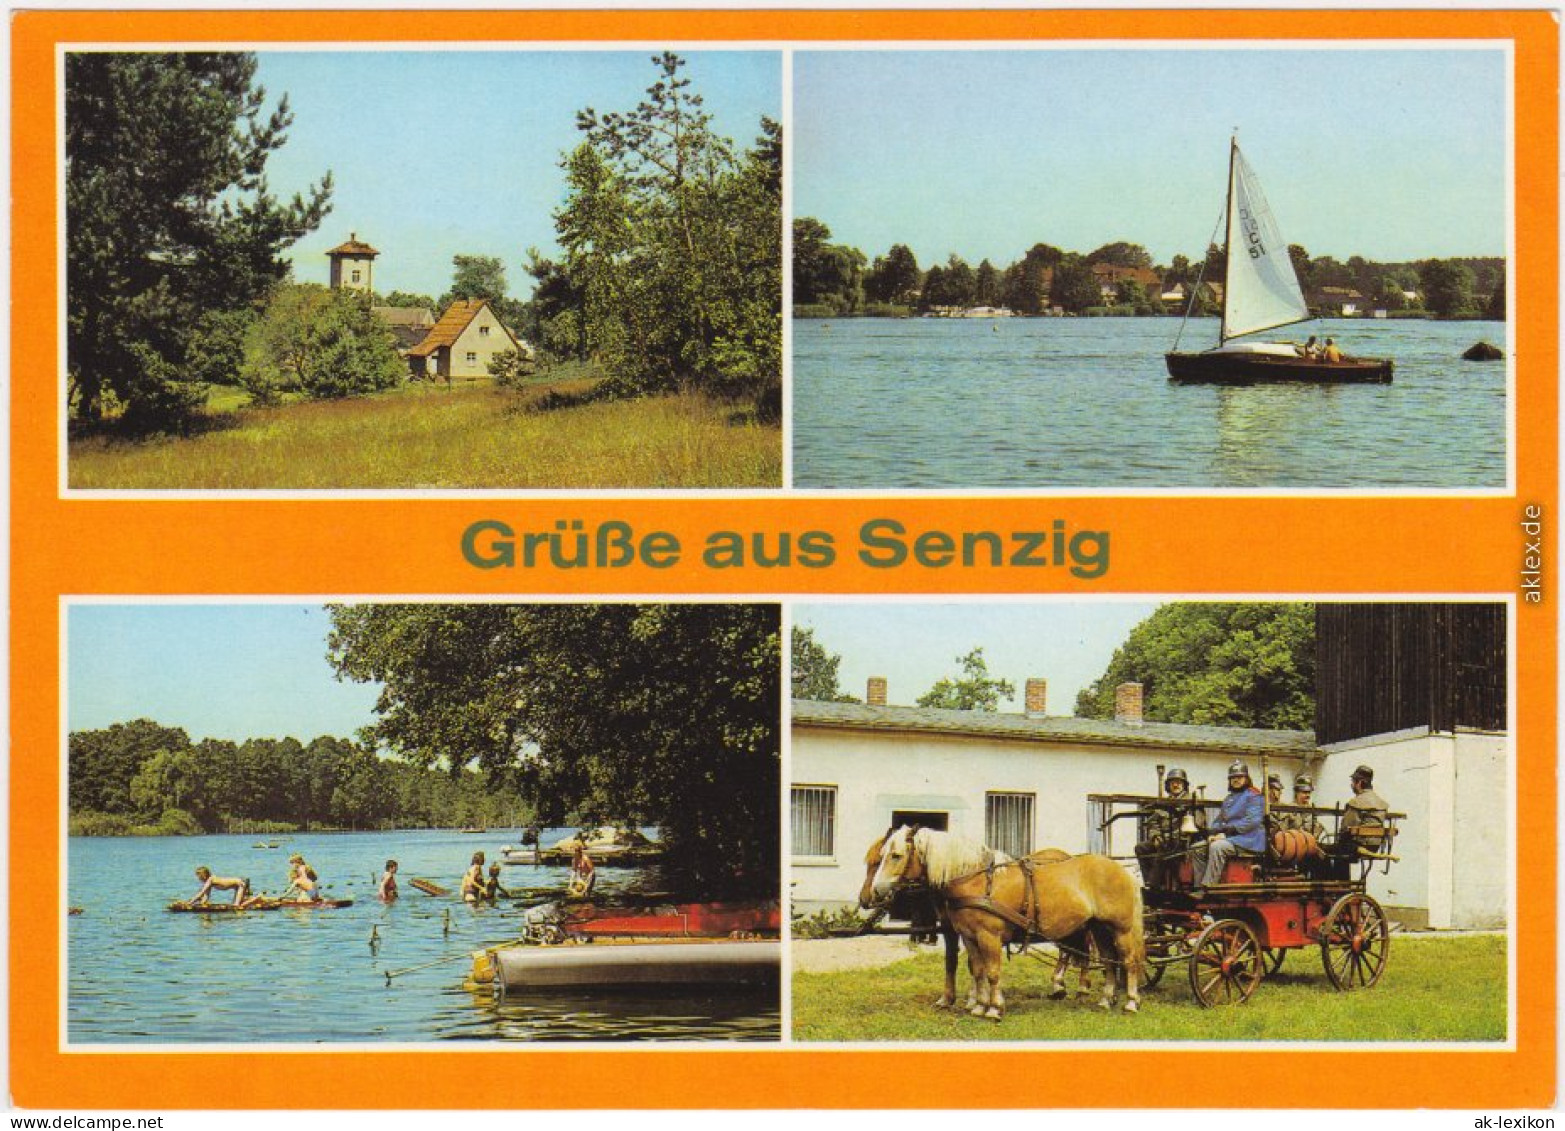 Senzig Königs Wusterhausen Blick Zum Ort, Blick über Den Krimnicksee 1987 - Koenigs-Wusterhausen